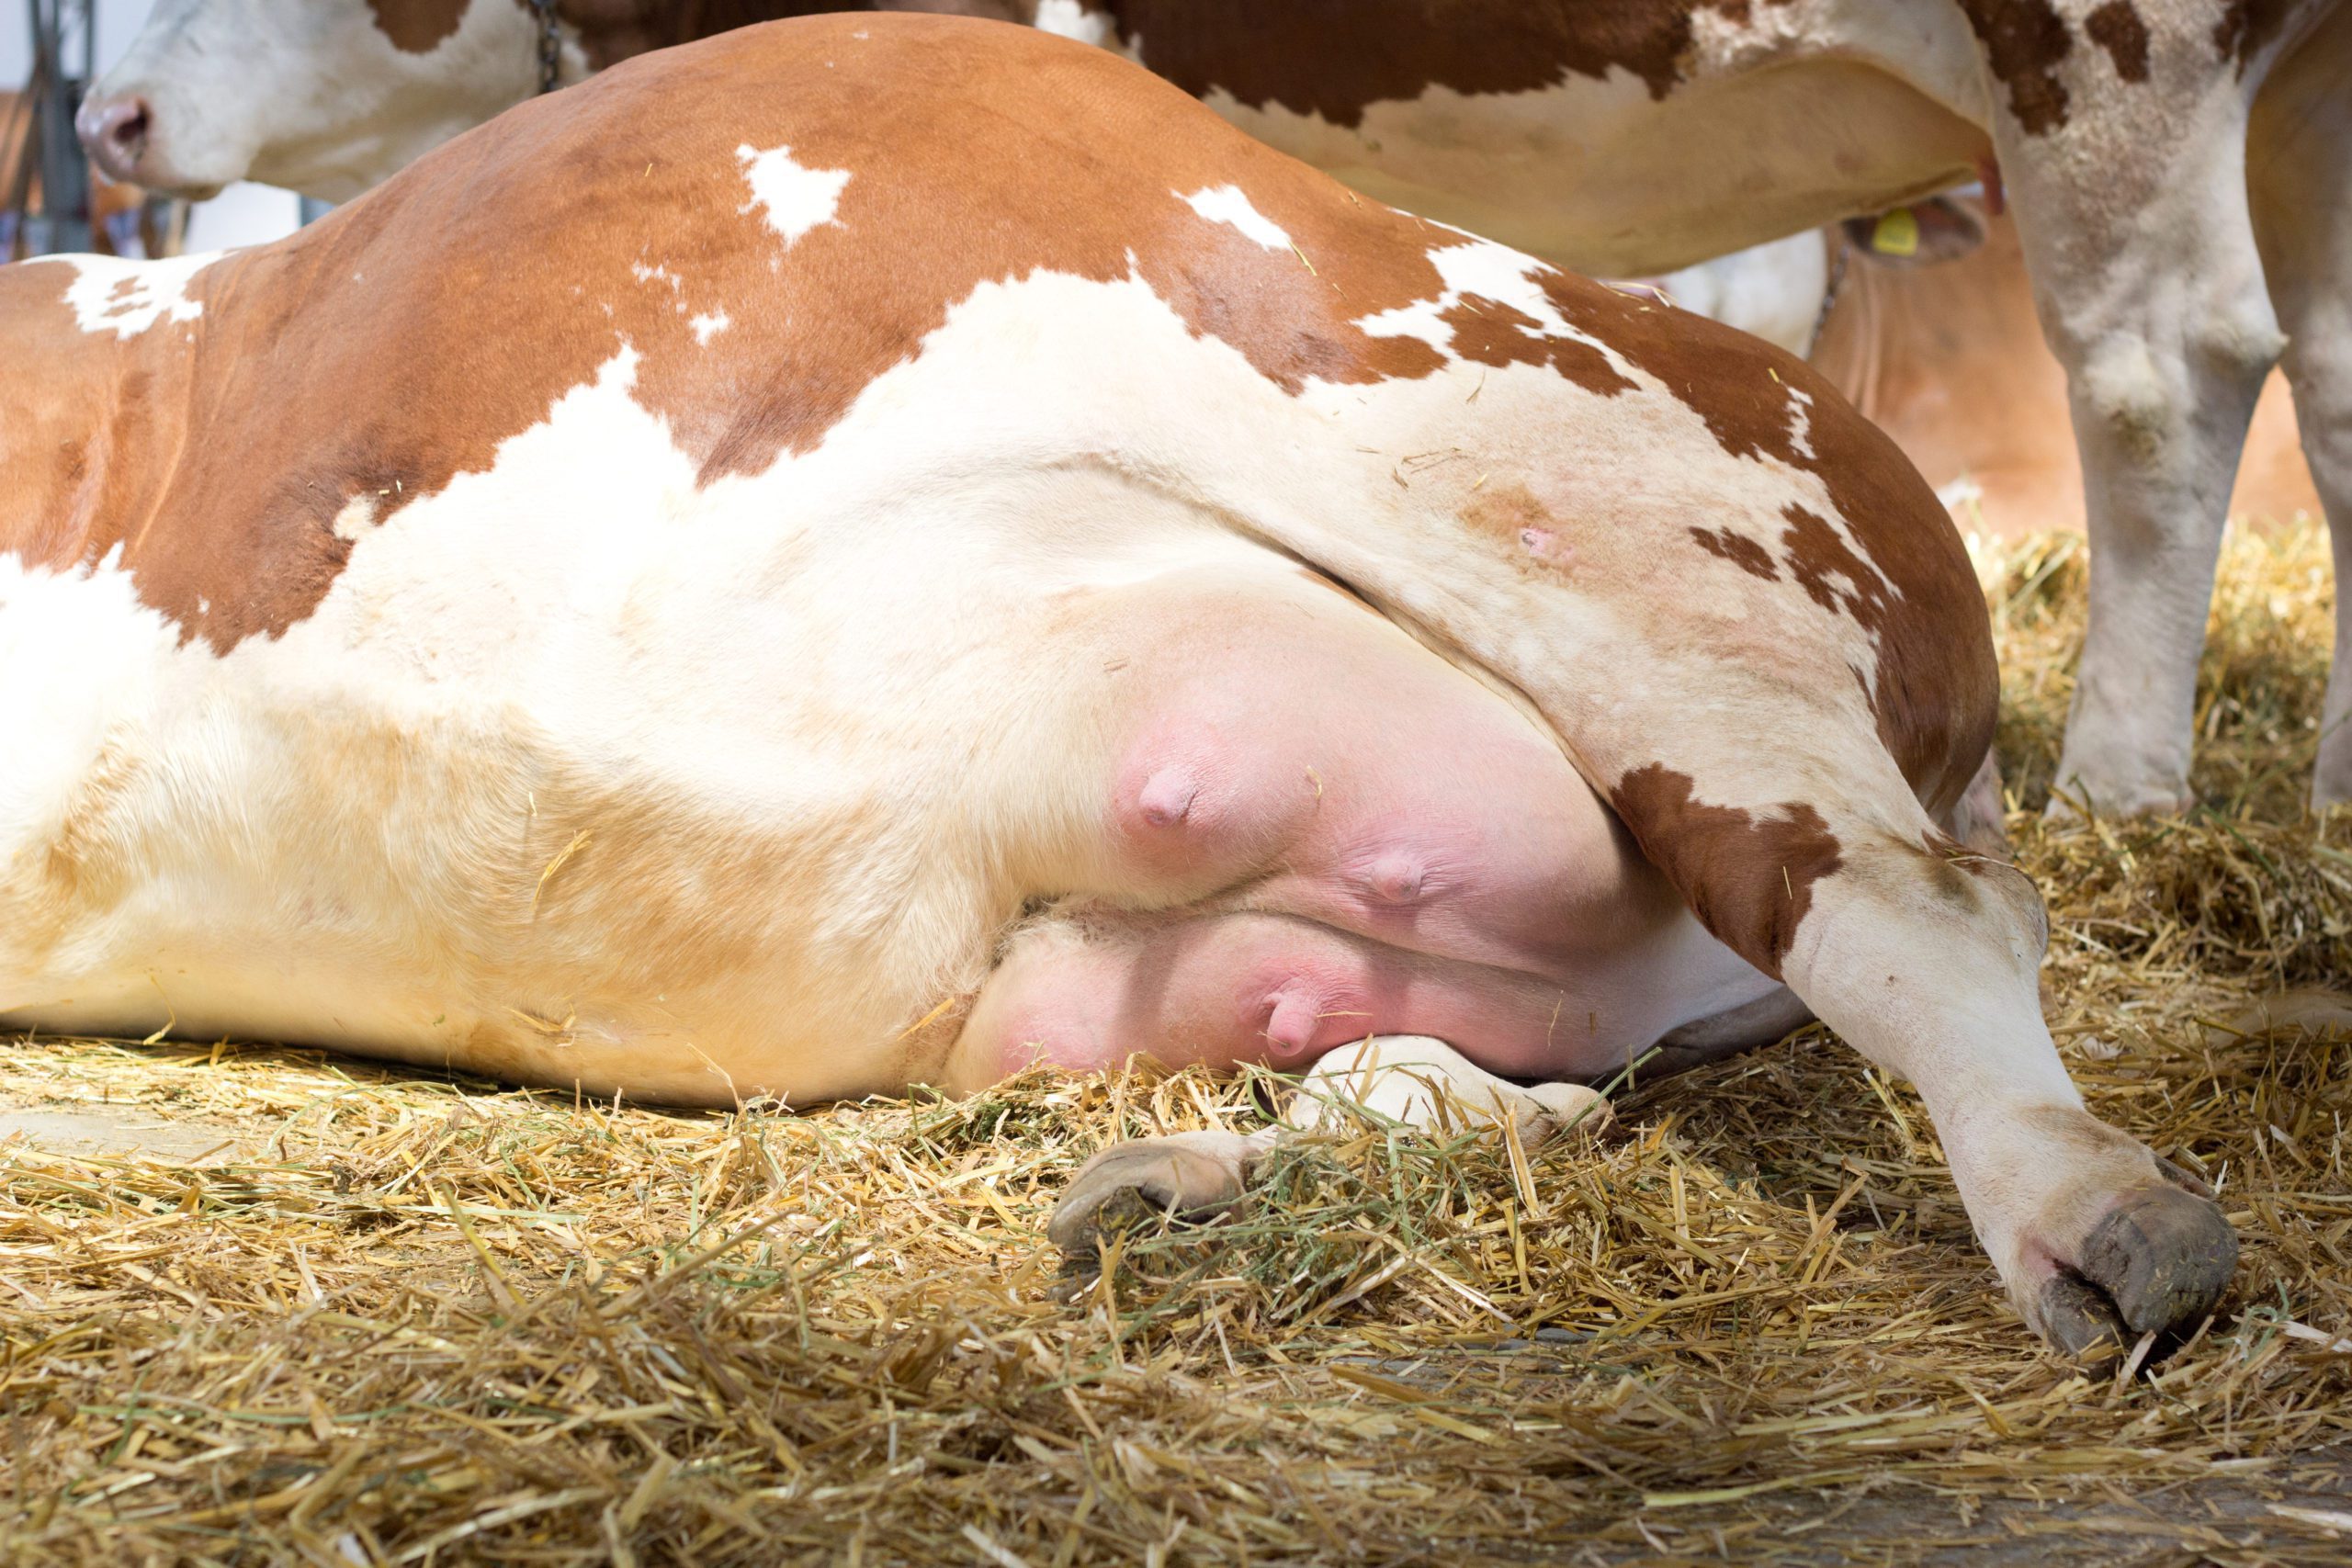 Cattle | Pro Earth Animal Health